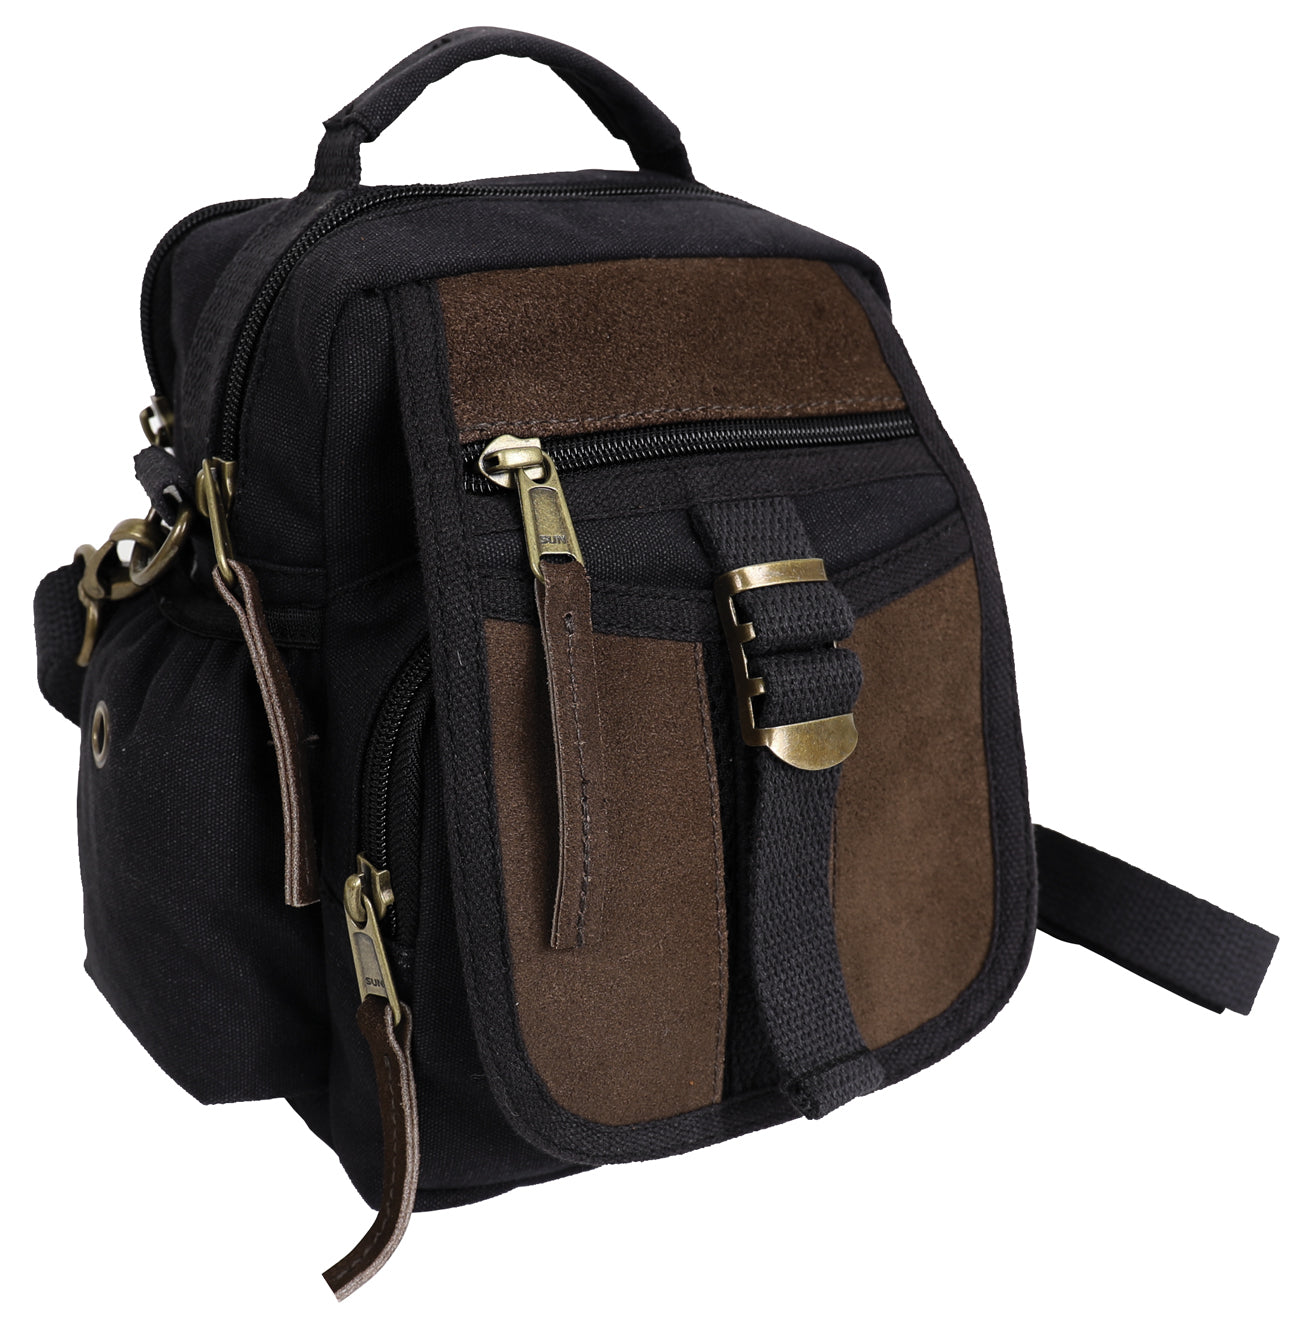 Milspec Canvas & Leather Travel Shoulder Bag Gifts For Her MilTac Tactical Military Outdoor Gear Australia